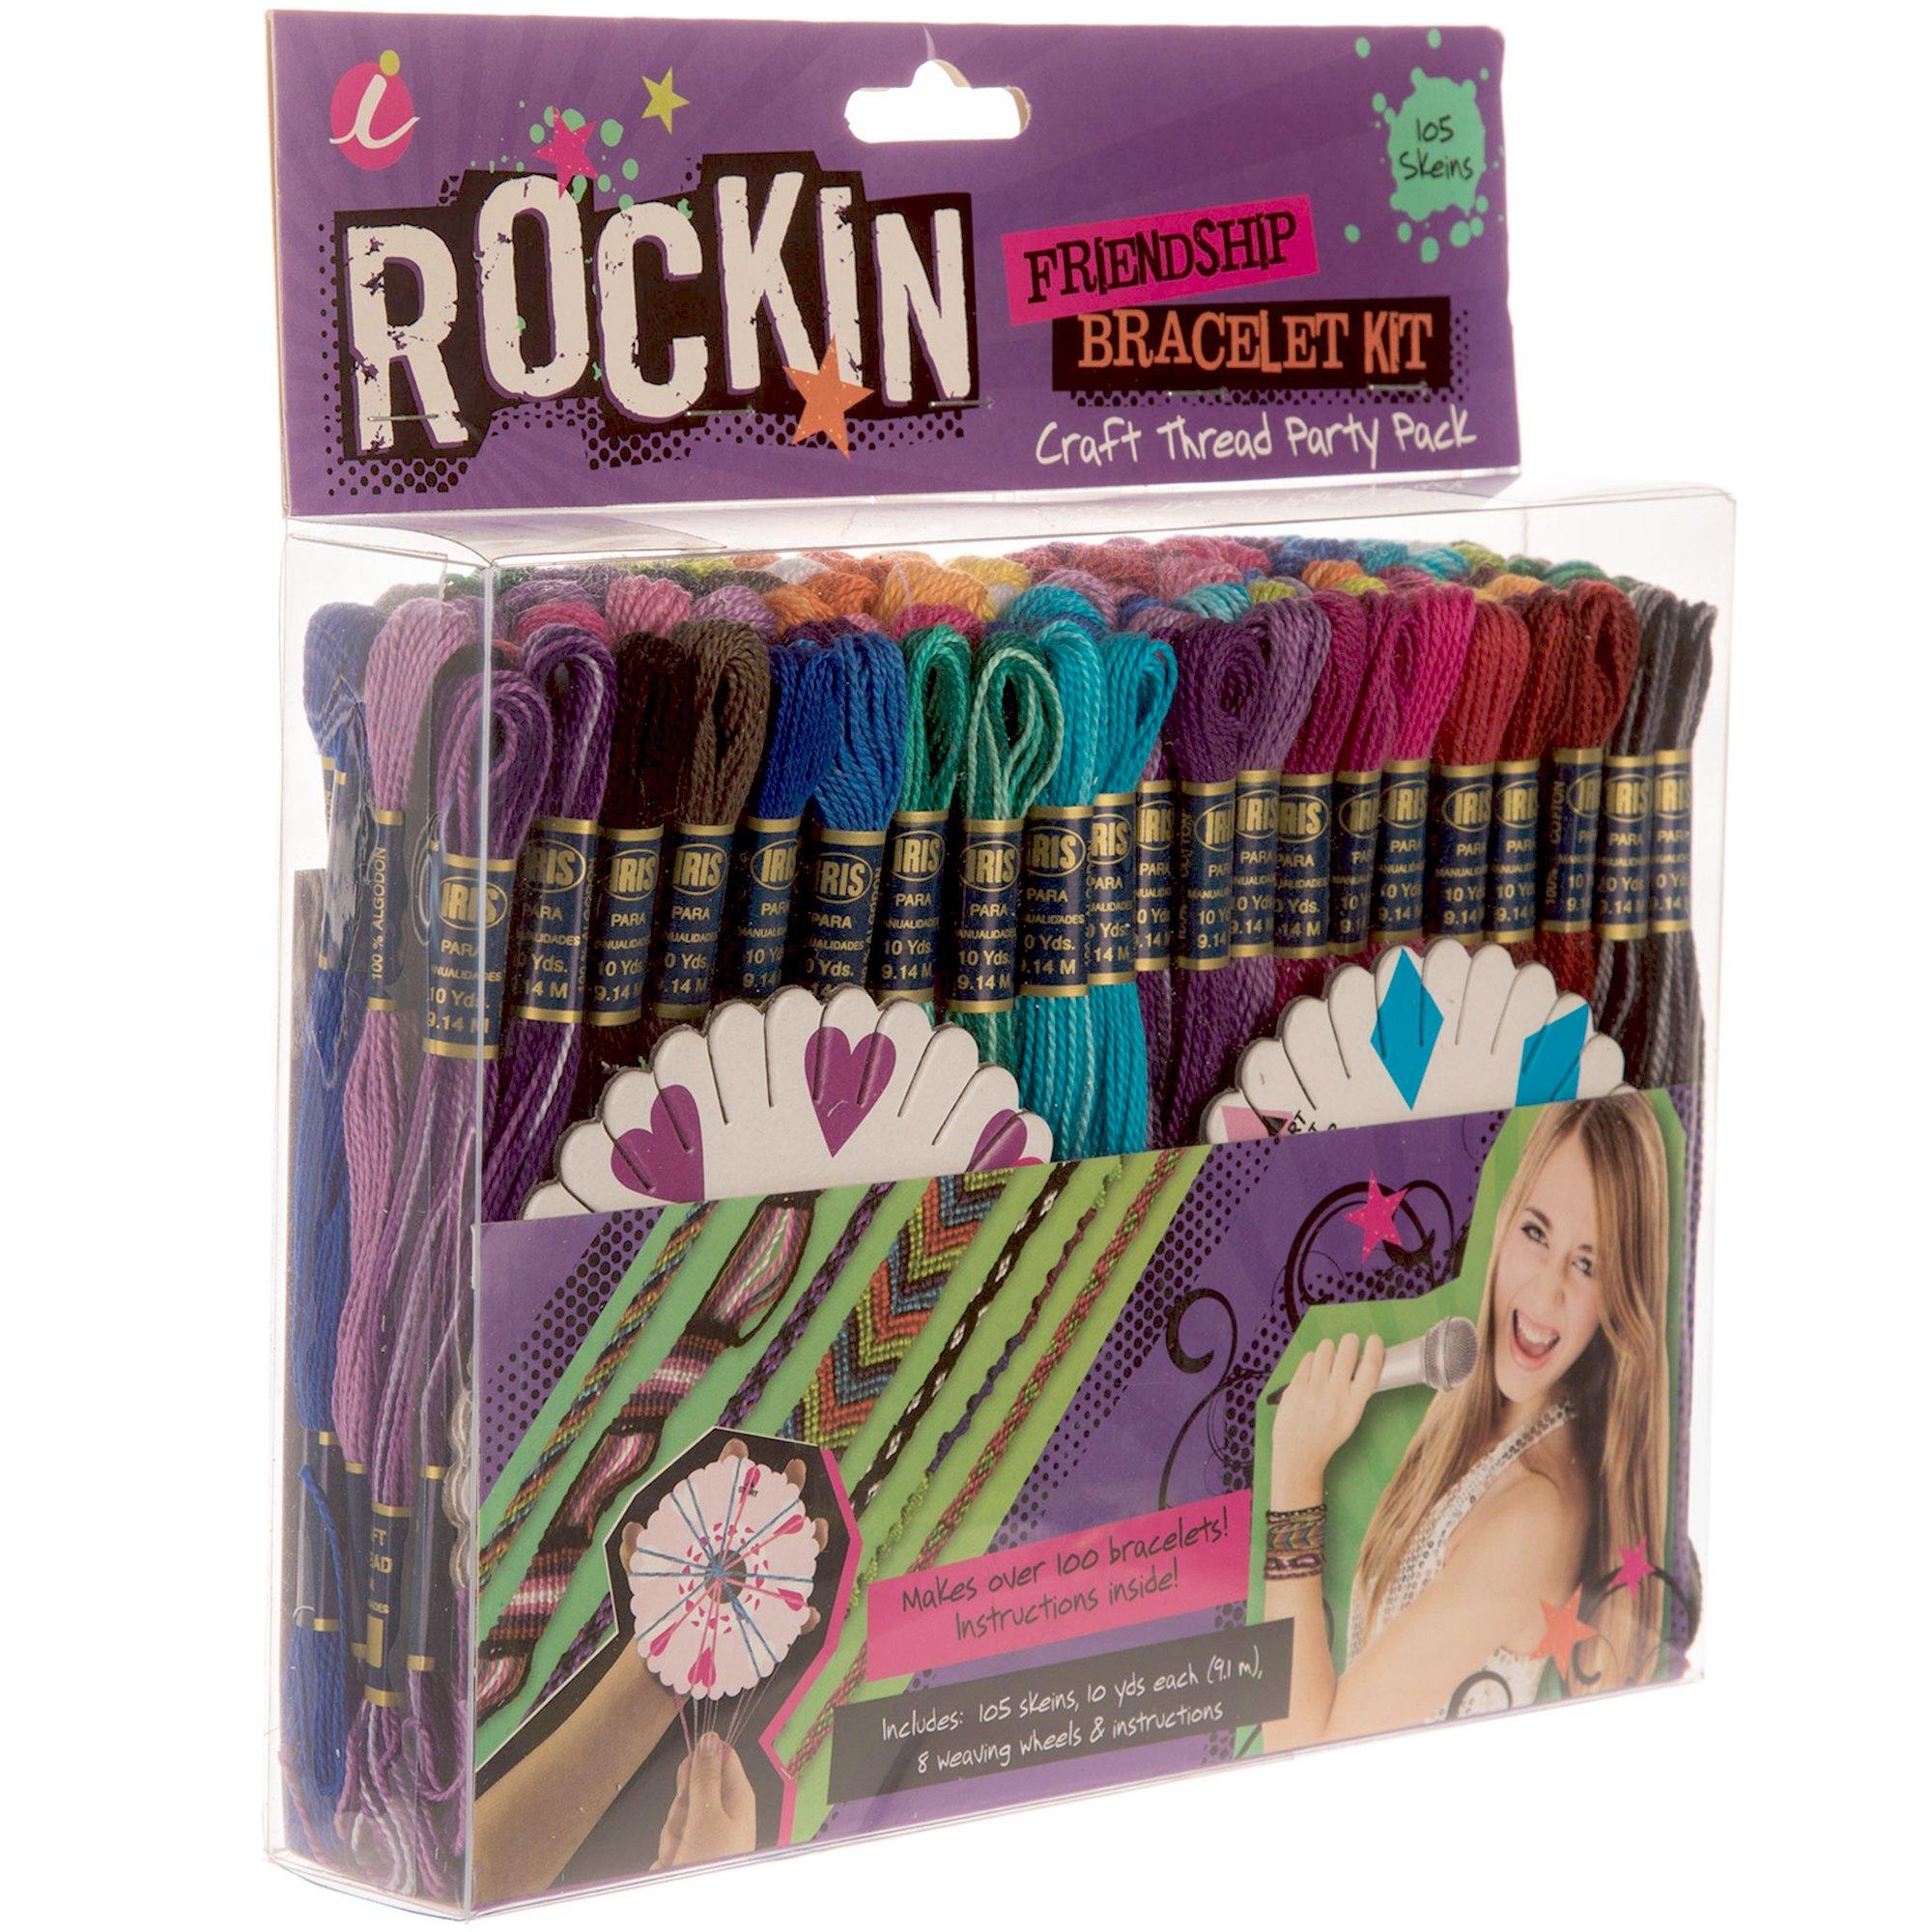 Rockin Friendship Bracelet Kit